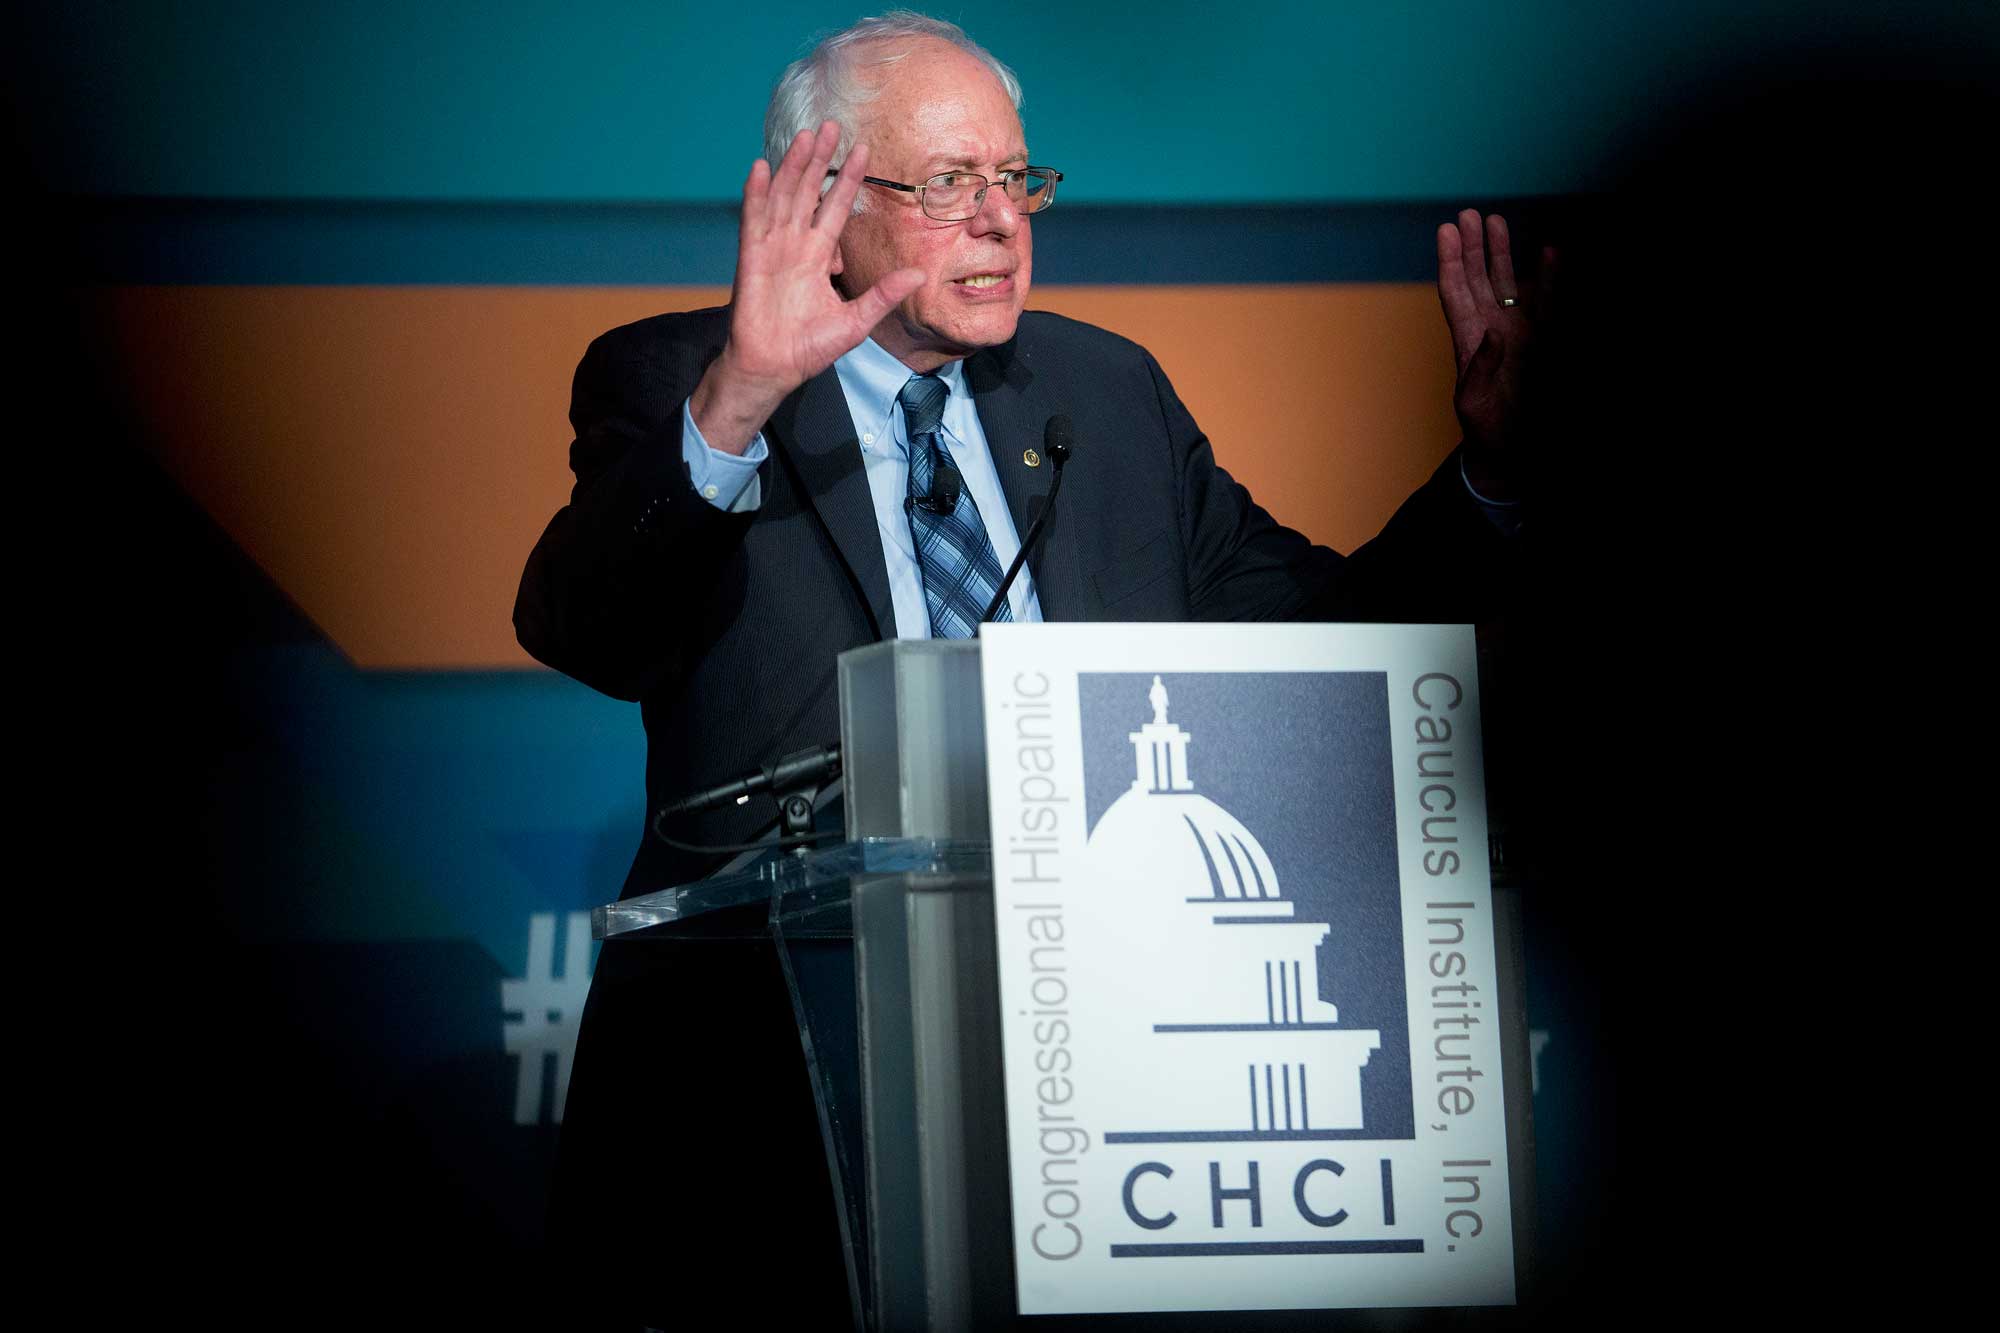 Senator Bernie Sanders speaks at the Congressional Hispanic Caucus Institute conference in Washington on Oct. 7, 2015.
